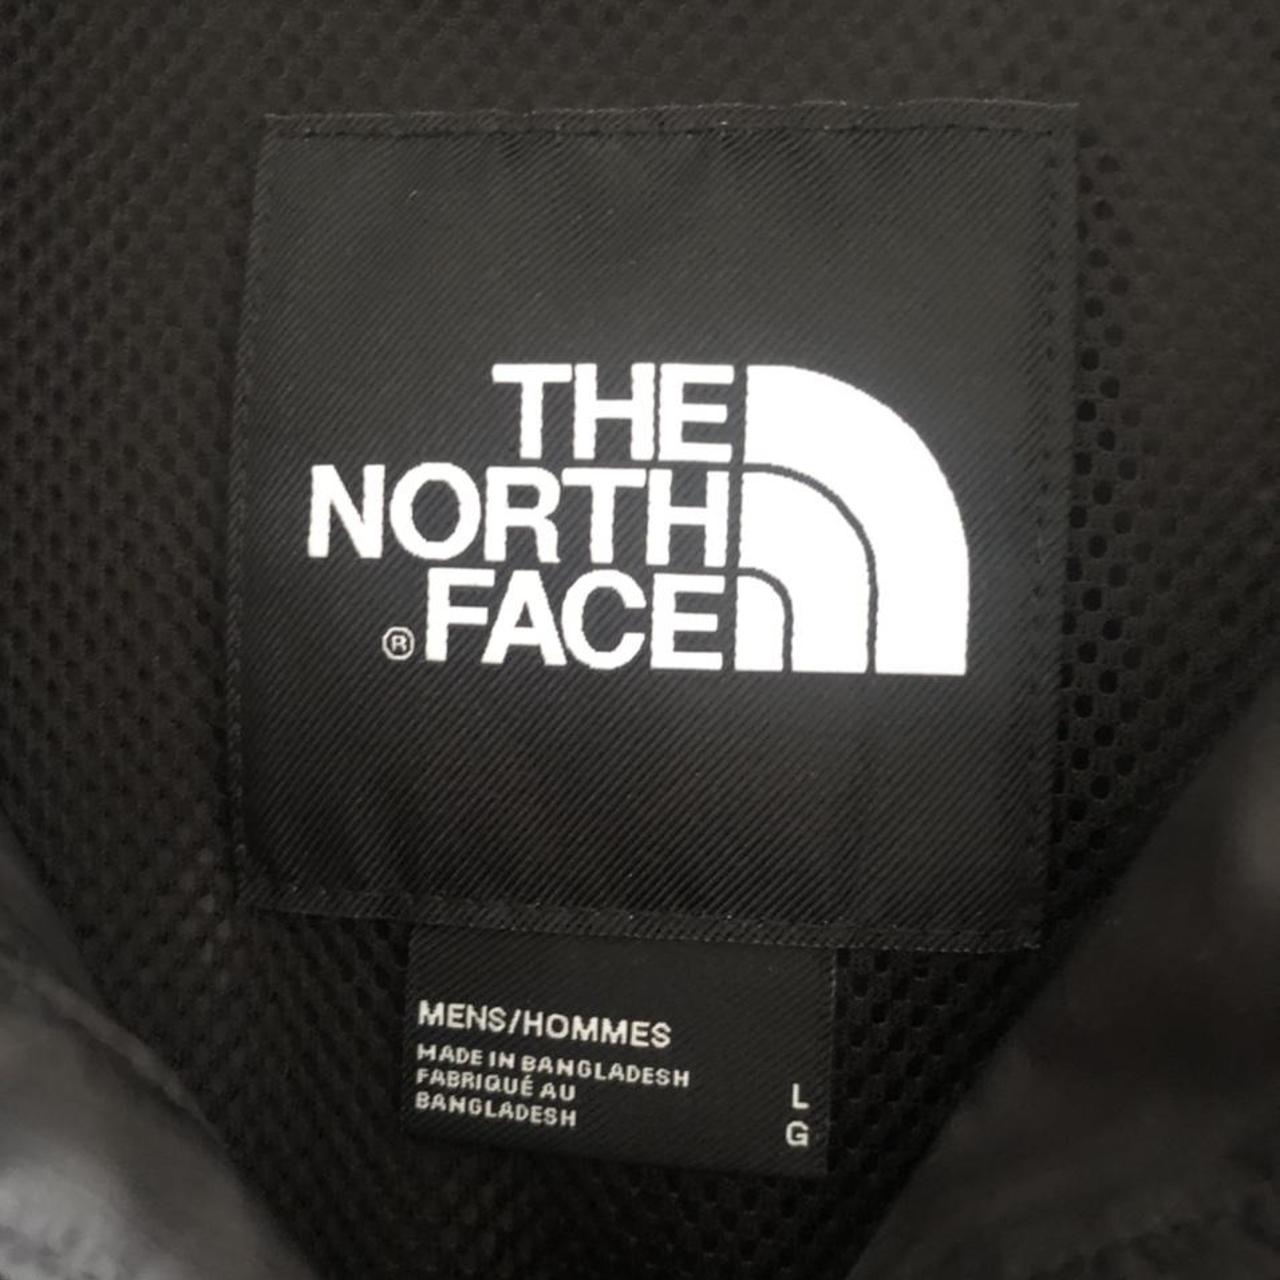 North face half zip anorak jacket in black and... - Depop